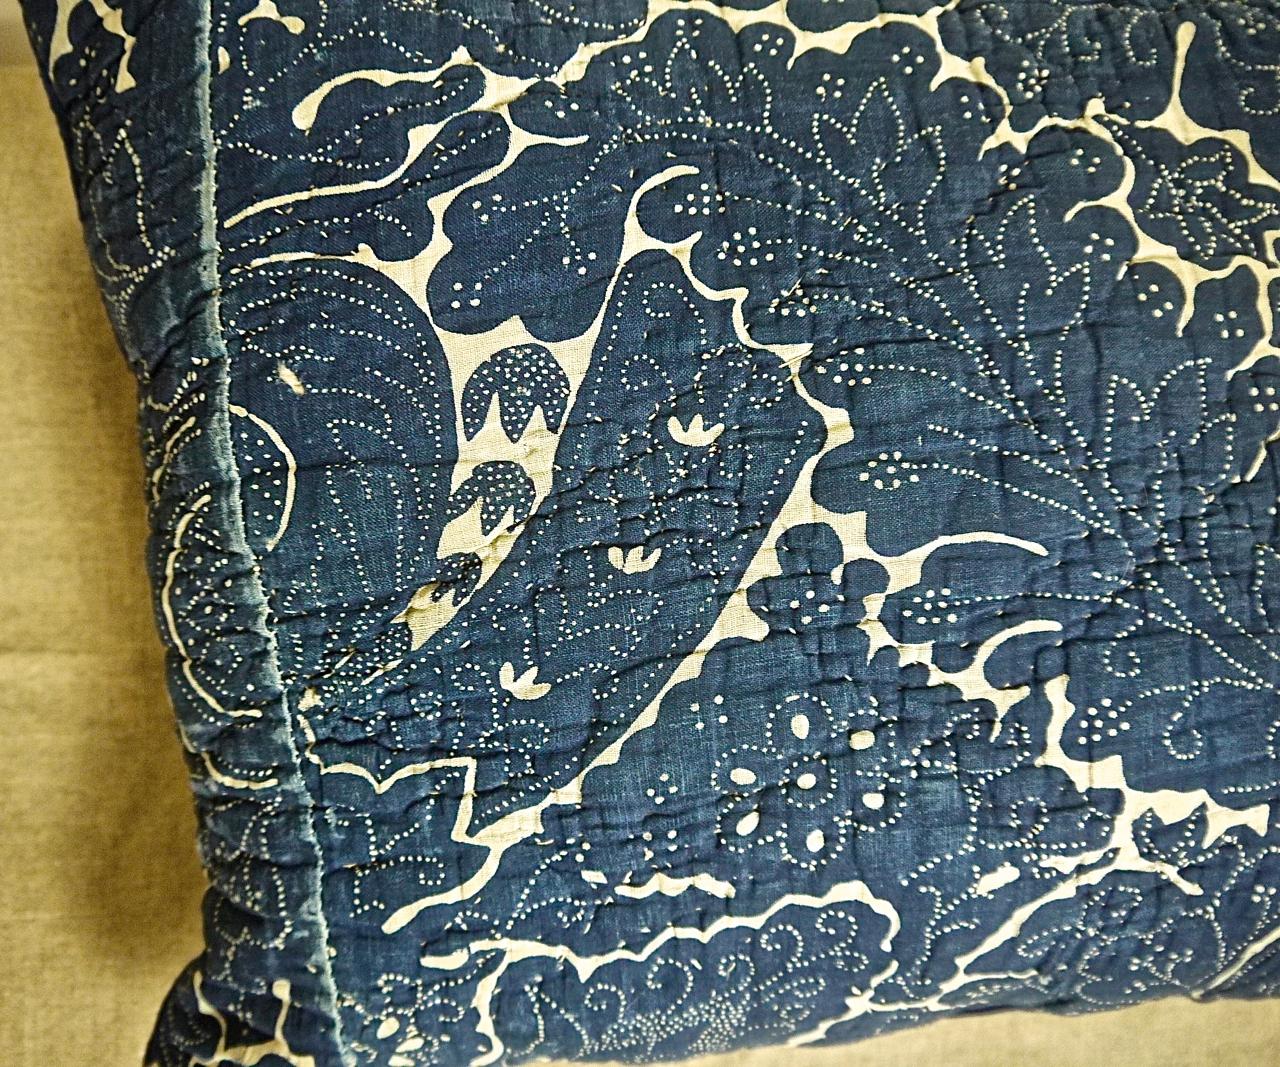 19th Century Indigo Resist Blockprinted Cotton Pillow, French, circa 1800